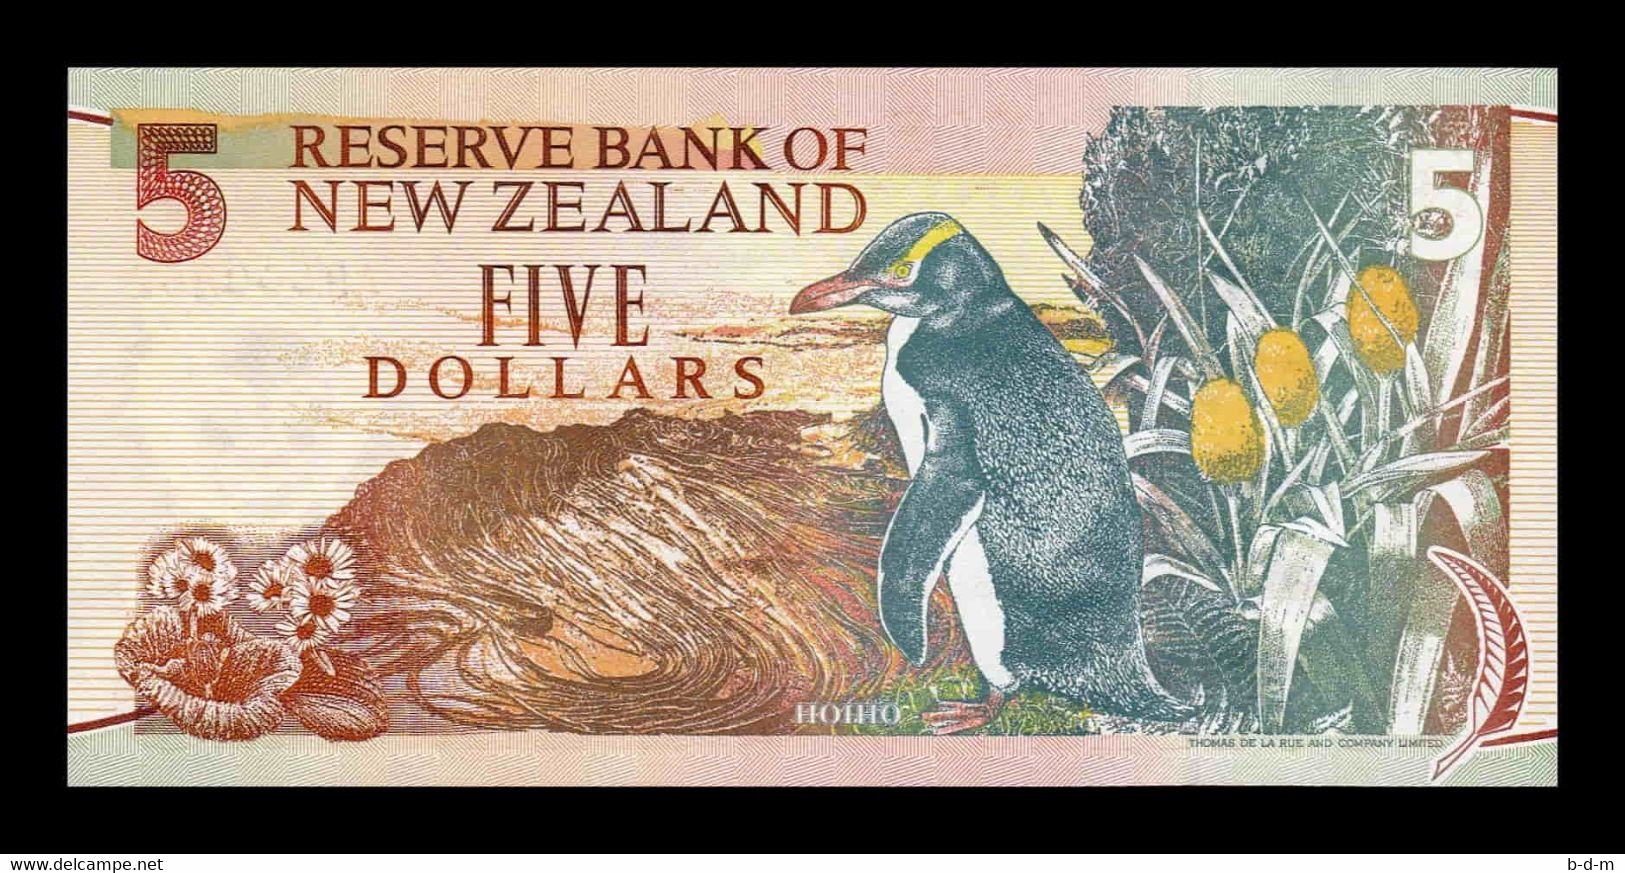 Nueva Zelanda New Zealand 5 Dollars 1992 Pick 177 Low Serial SC UNC - Neuseeland